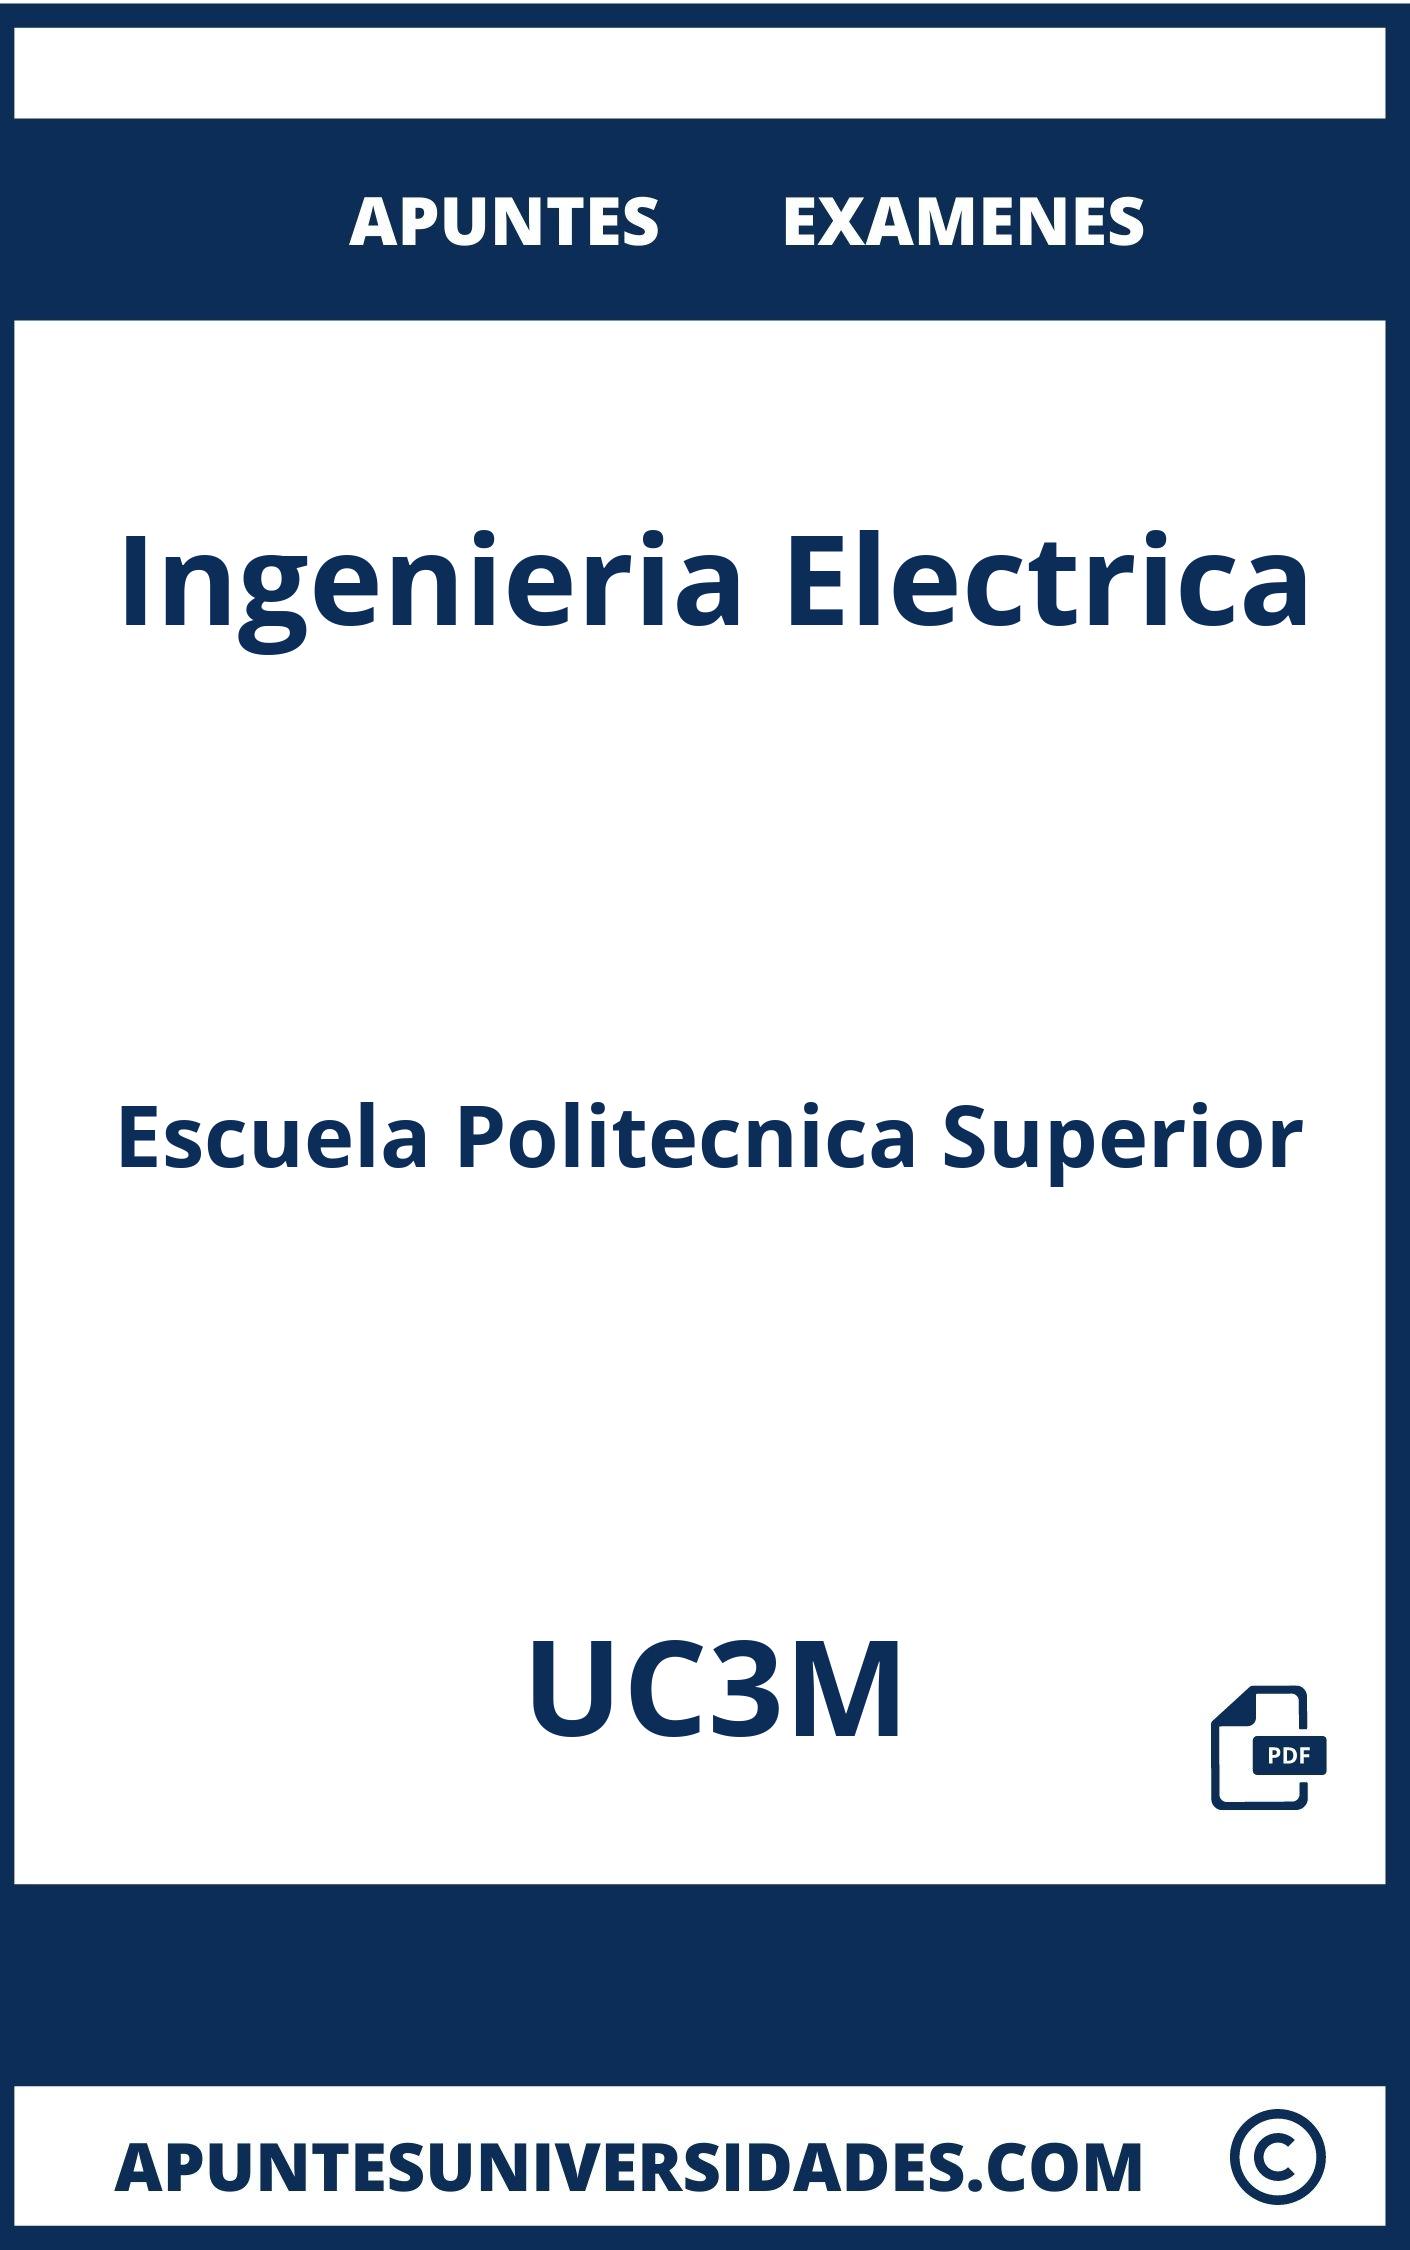 Apuntes y Examenes Ingenieria Electrica UC3M